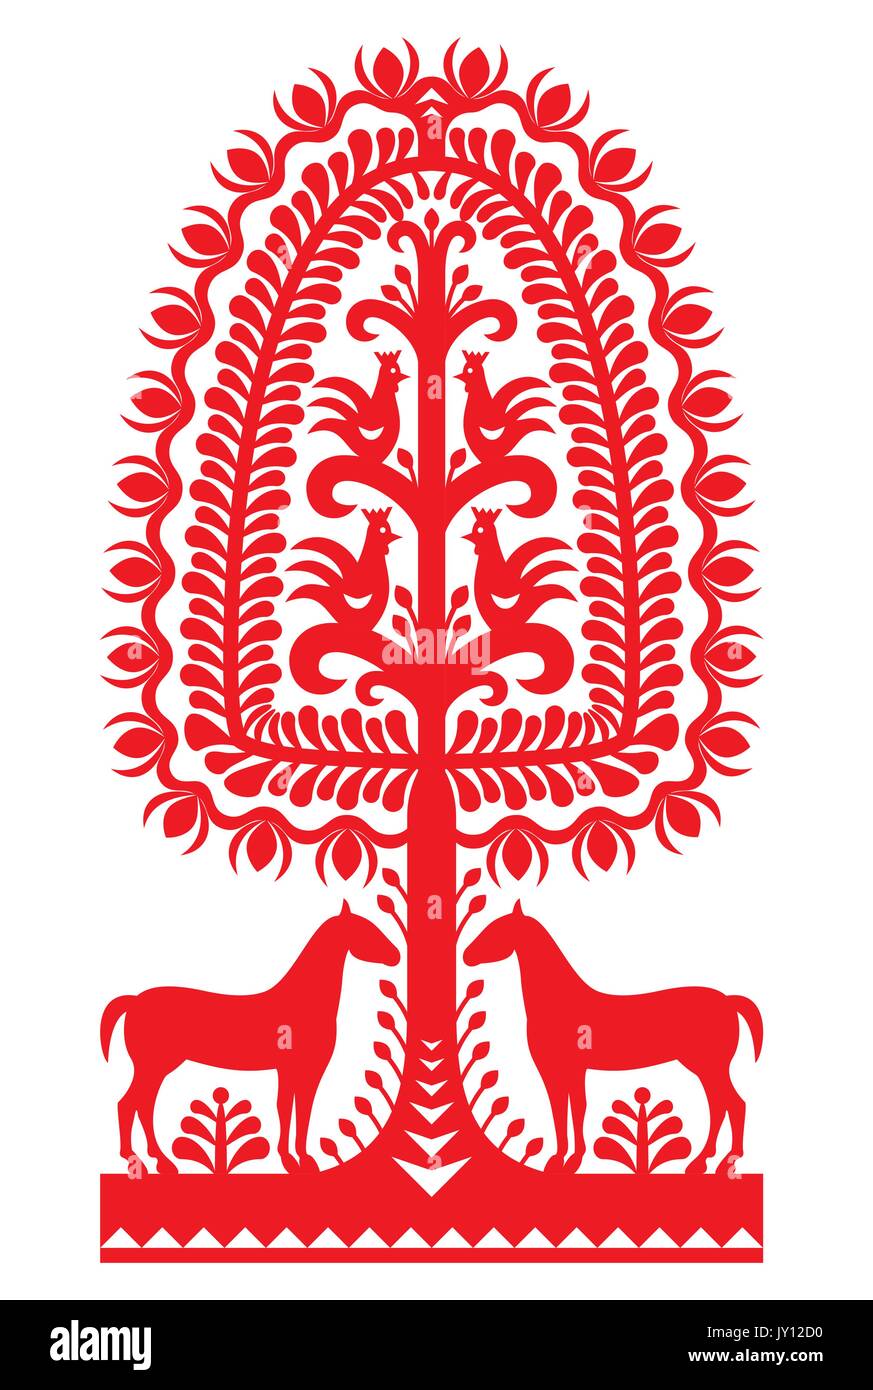 Polish folk art pattern Wycinanki Kurpiowskie - Kurpie Papercuts   Vector design of horse, tree and chickens - folk design from the region of Kurpie i Stock Vector